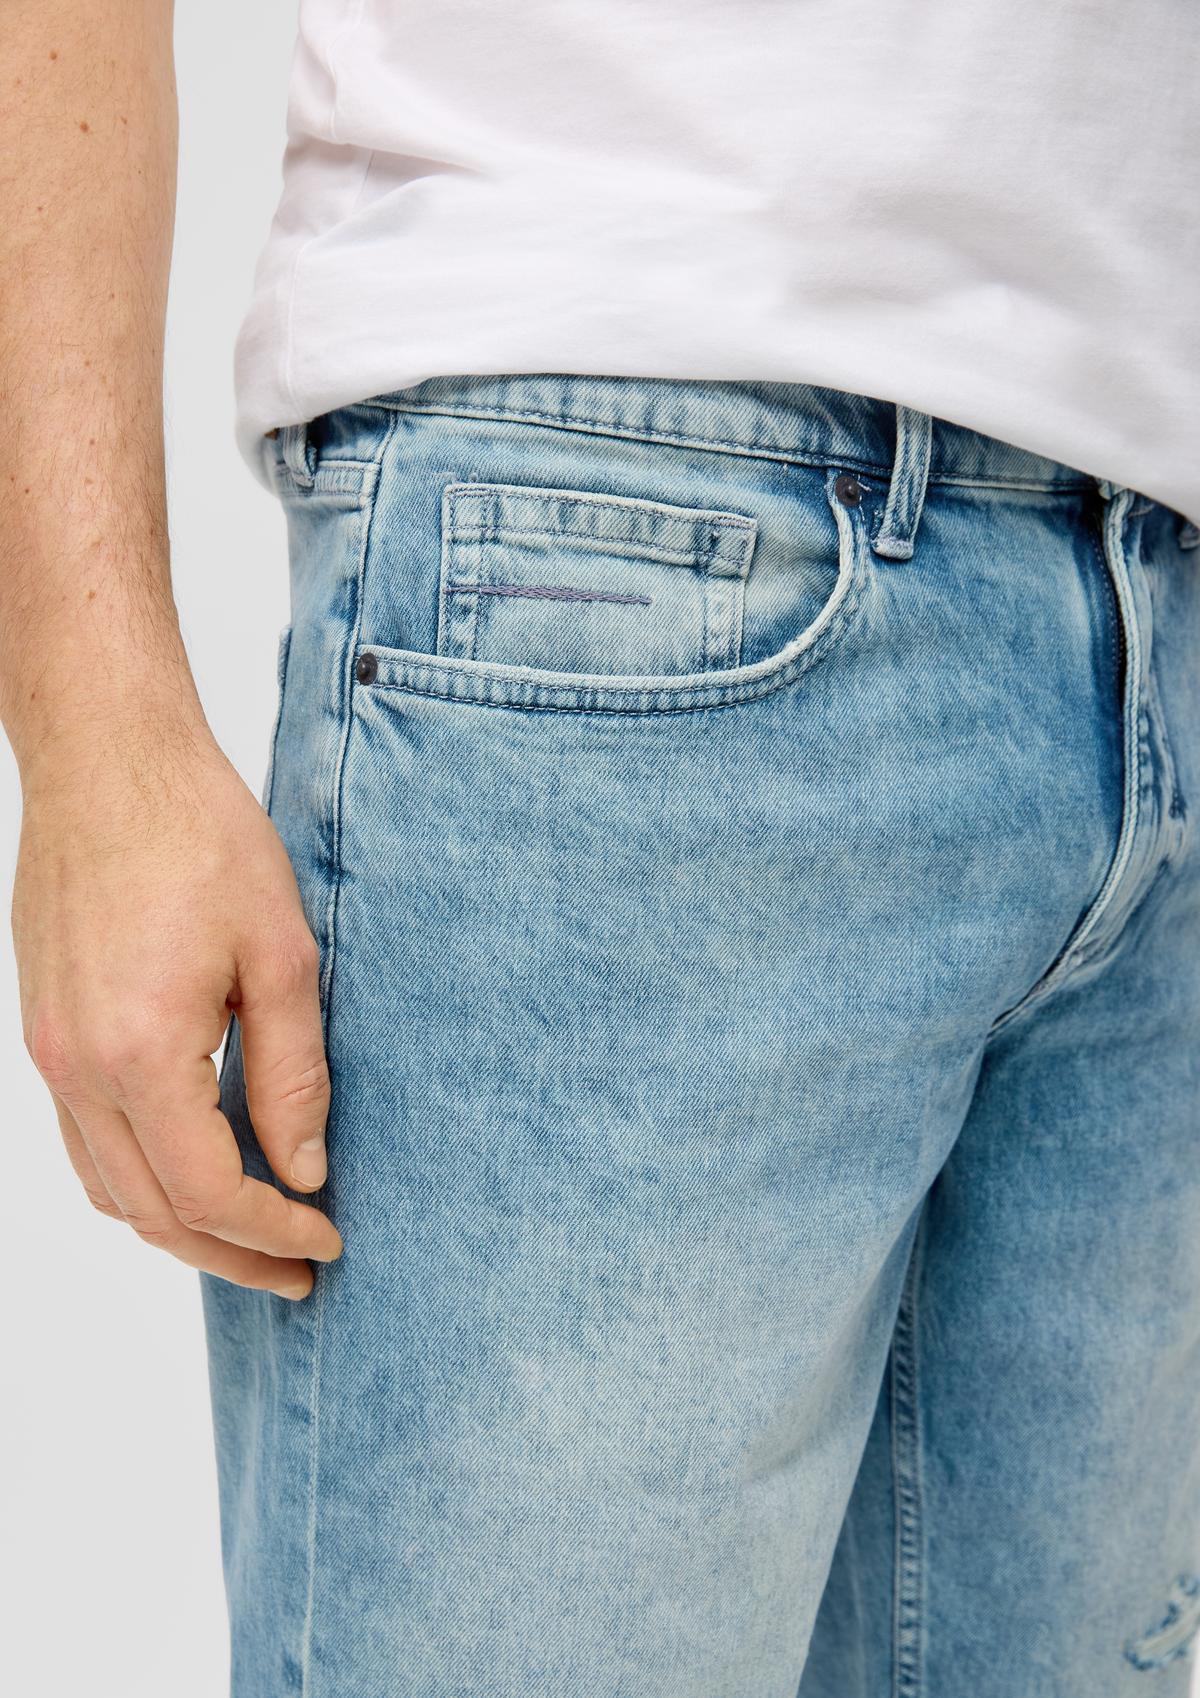 s.Oliver Jeans-Shorts / Regular Fit / Mid Rise / Slim Leg